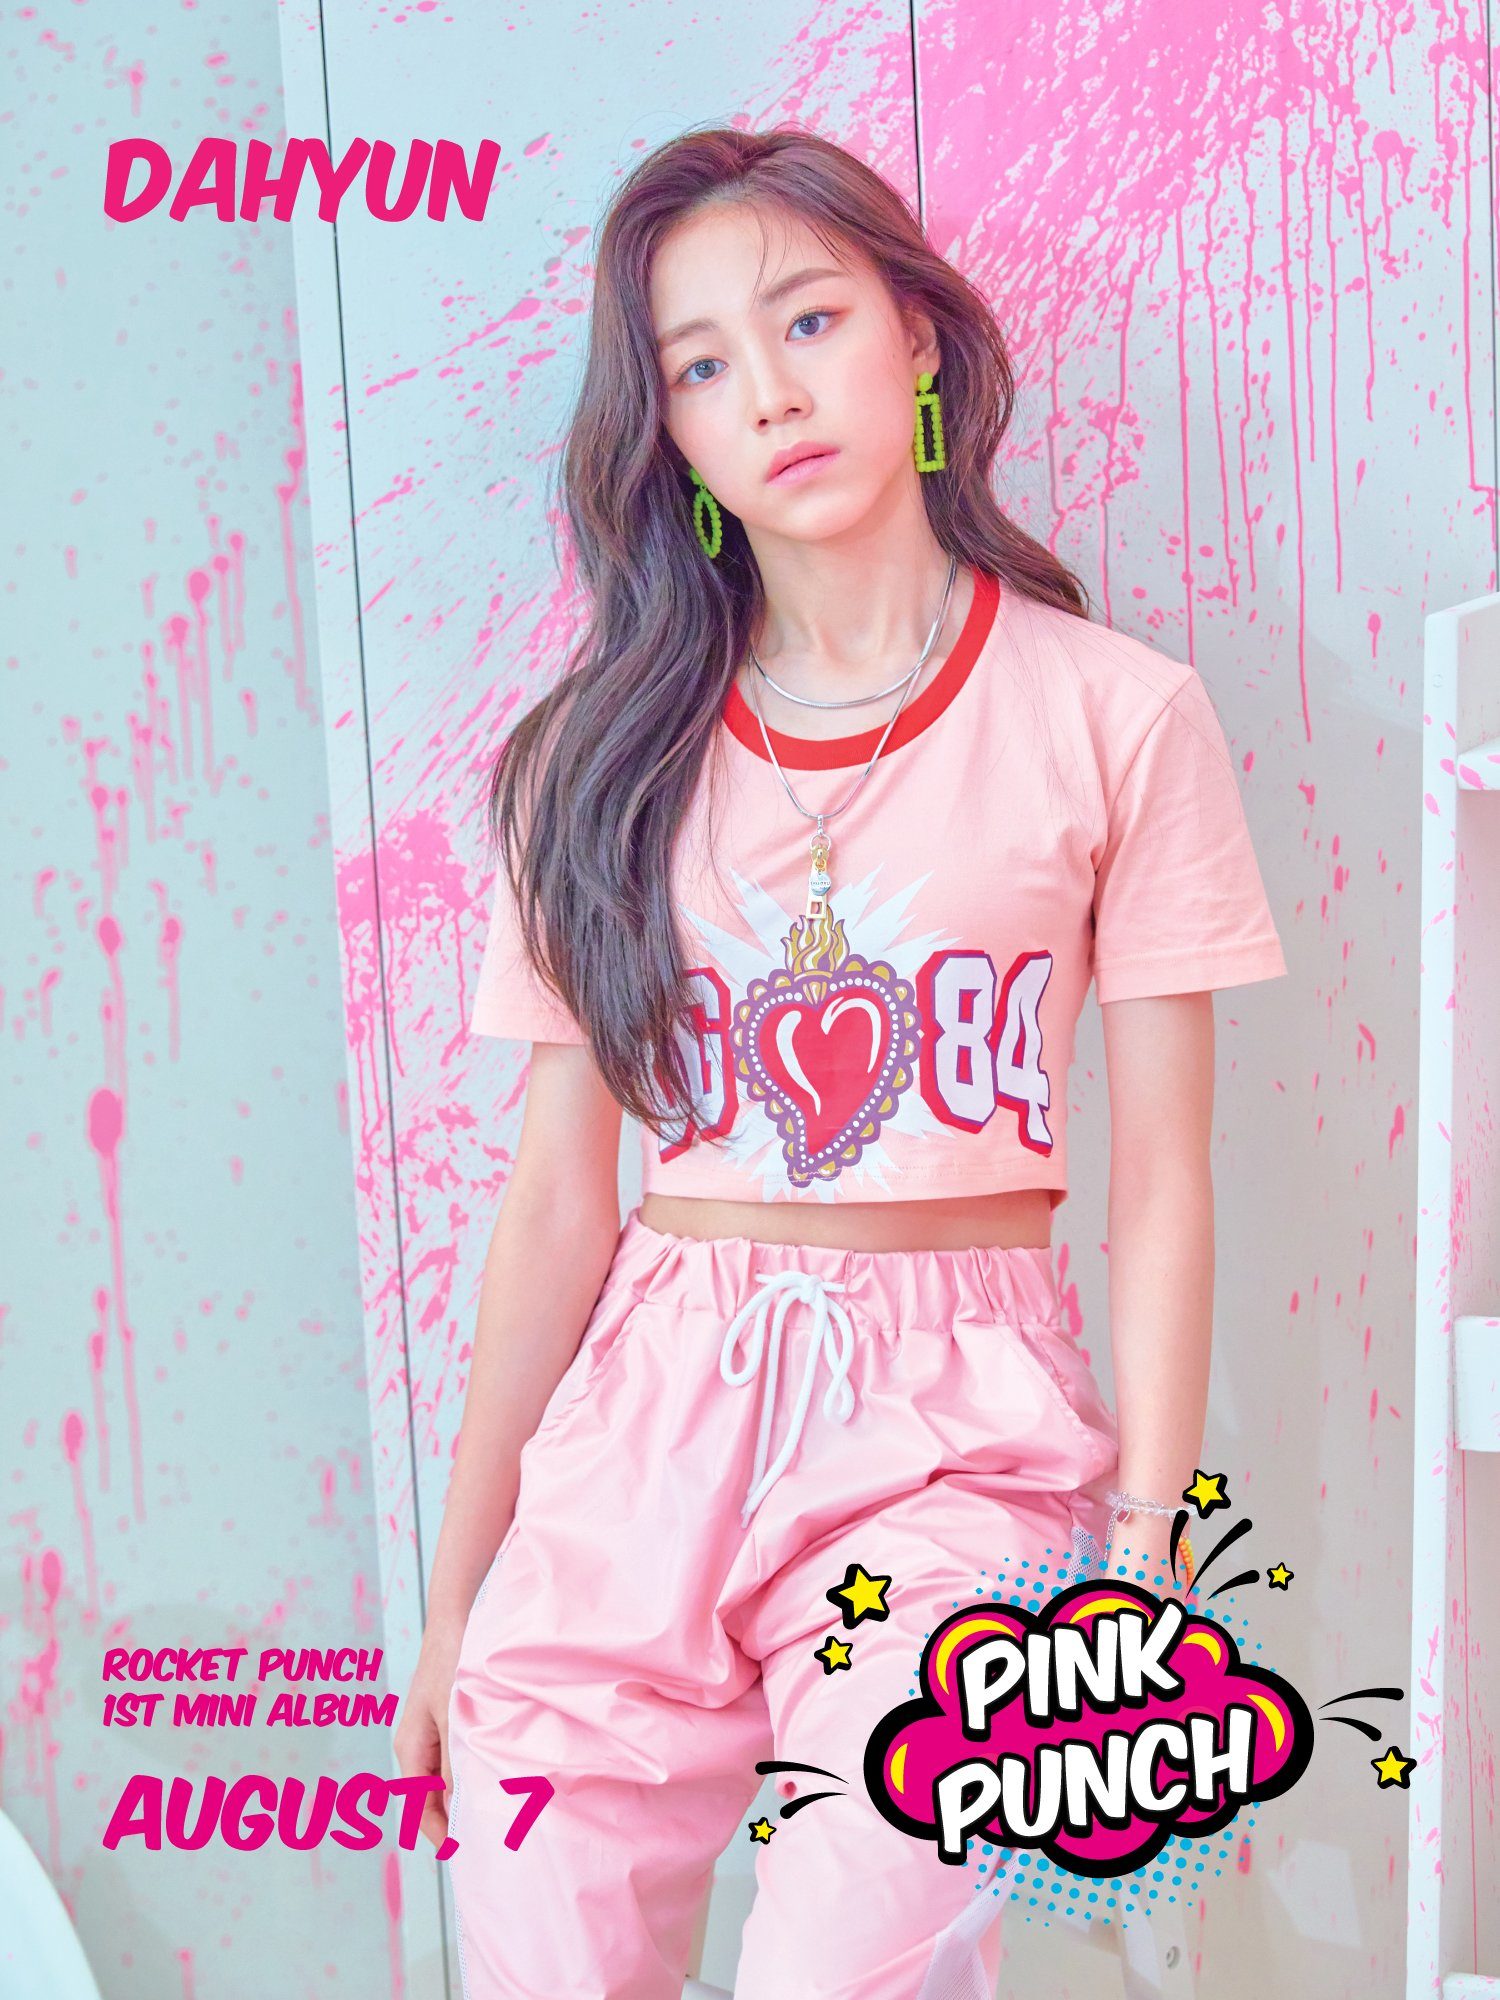 Rocket Punch Dahyun Pink Punch